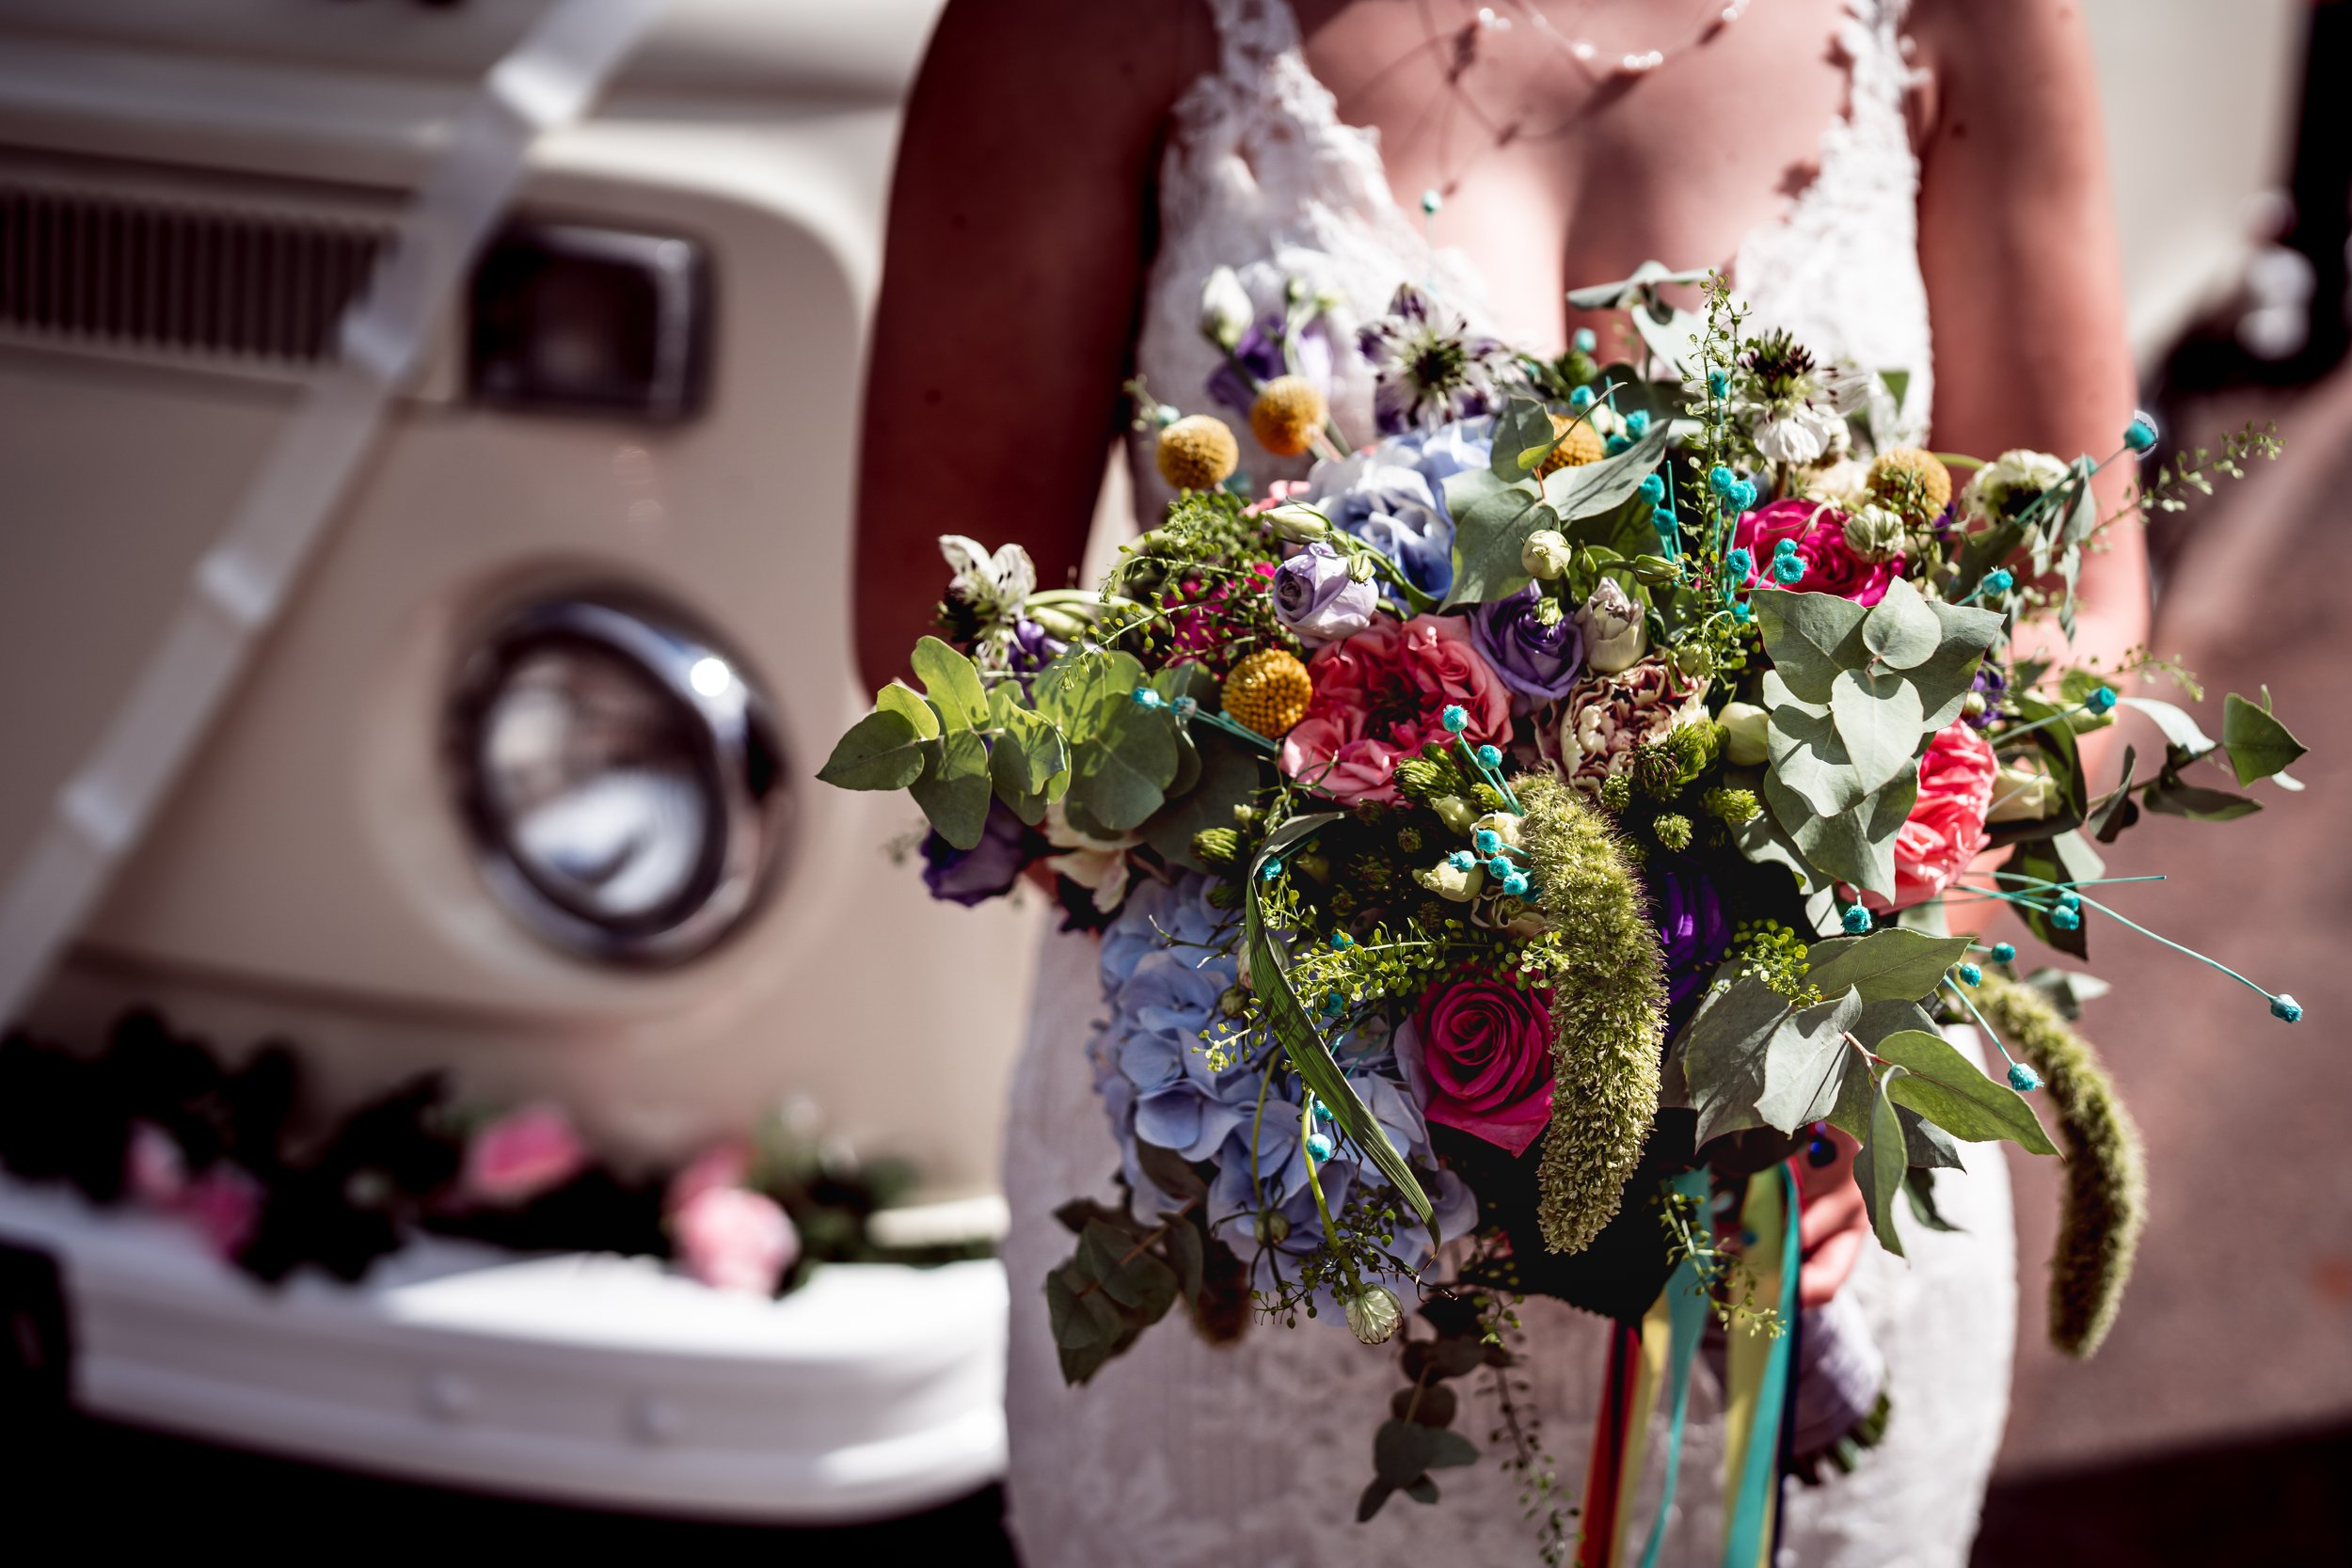 Walker_McCabe Wedding_Photographer Ashtree_Farm Market_Harborough Festival VW Colourful Wedding-10.jpg